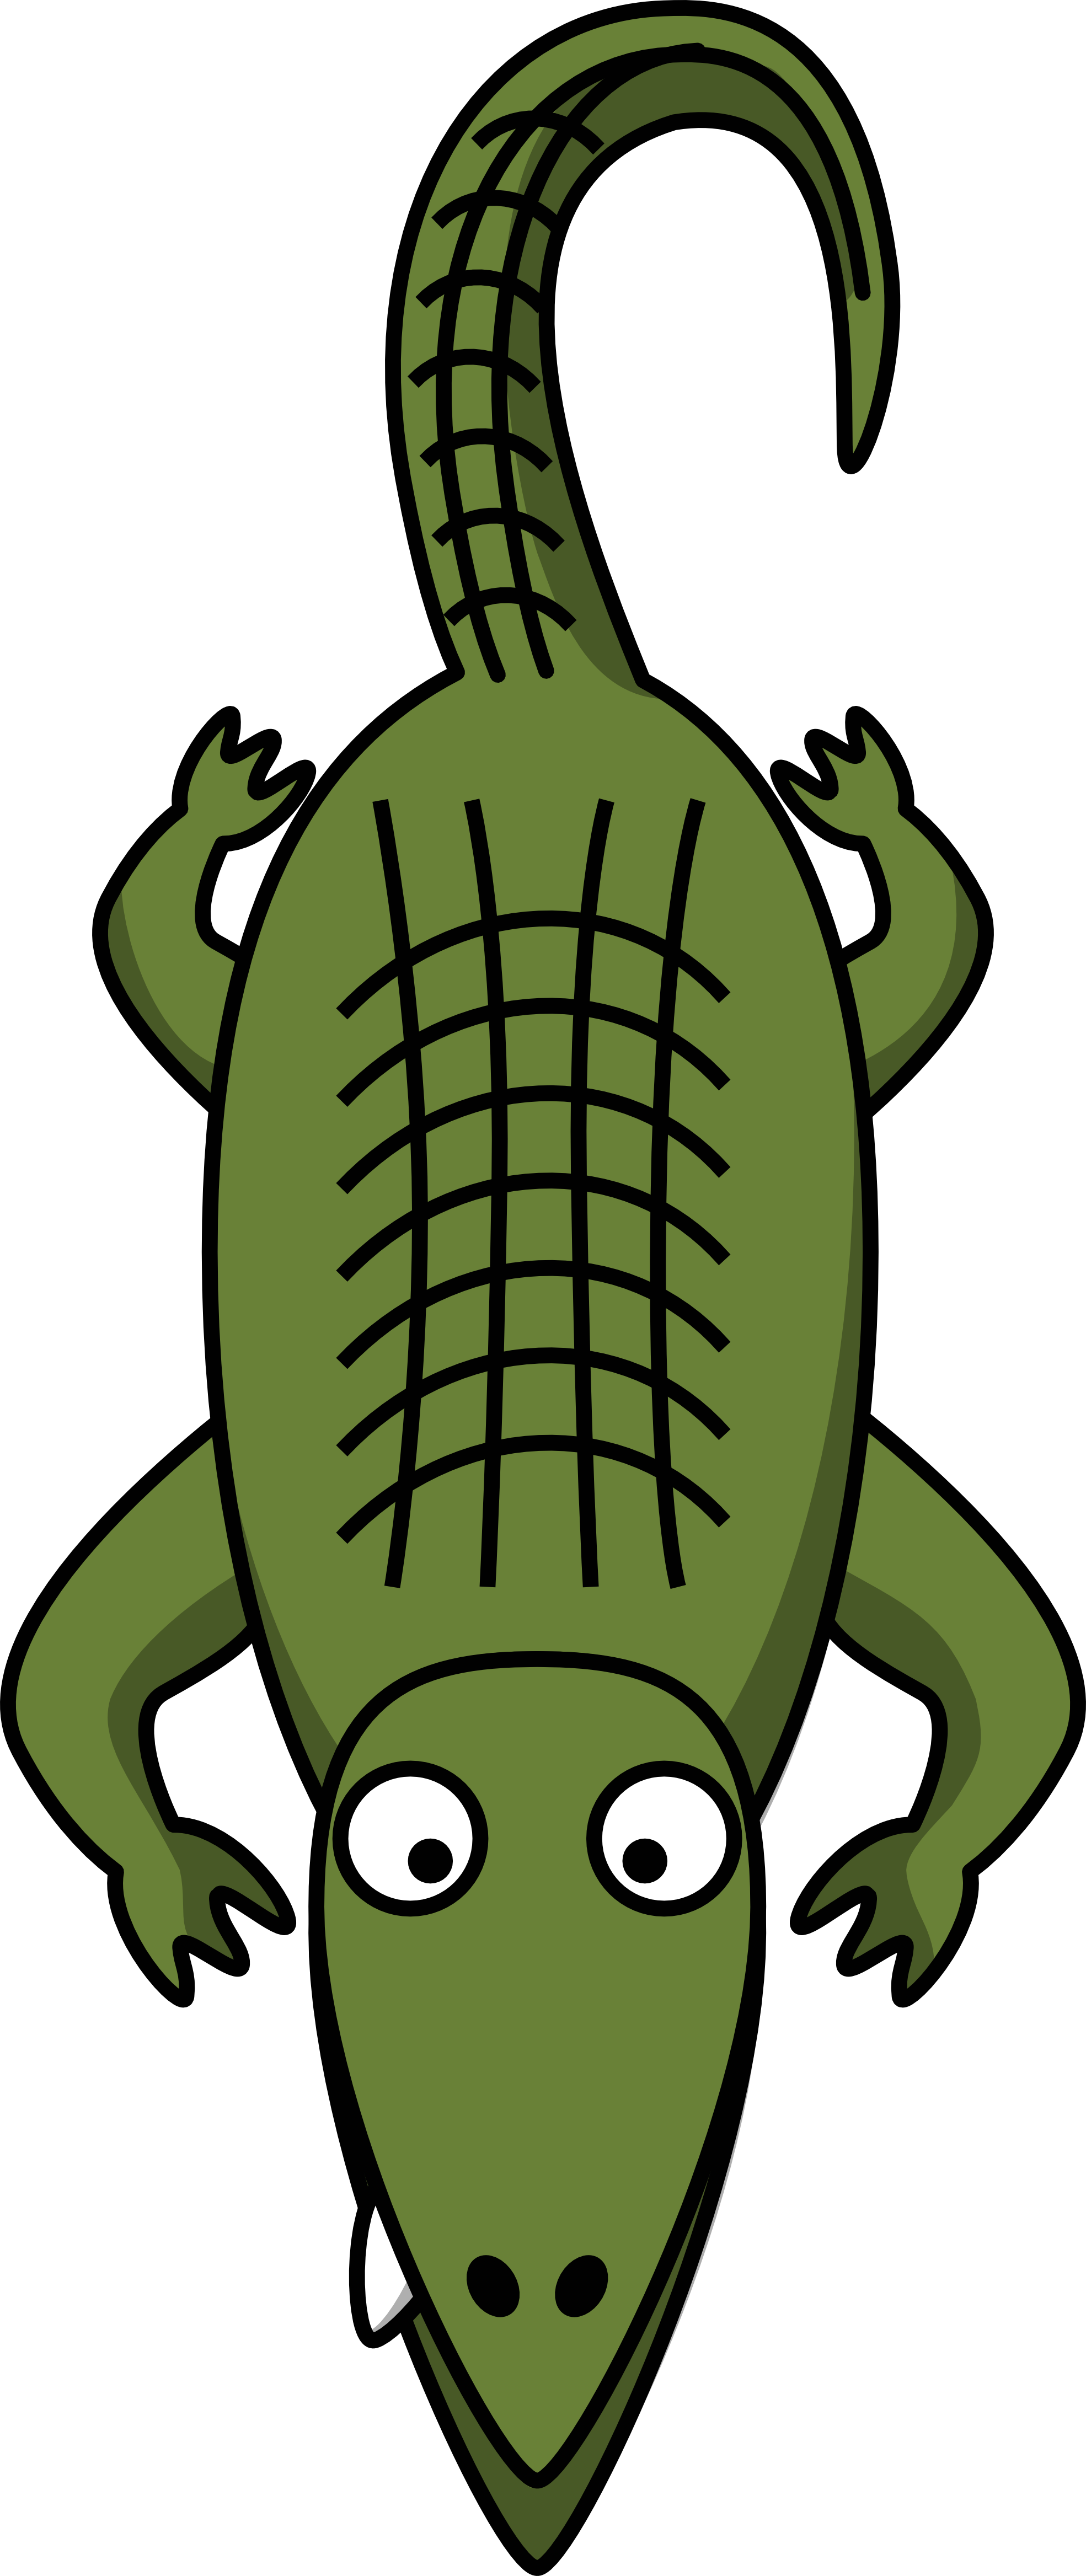 studiofibonacci cartoon alligator SVG - Clipart library - Clipart library